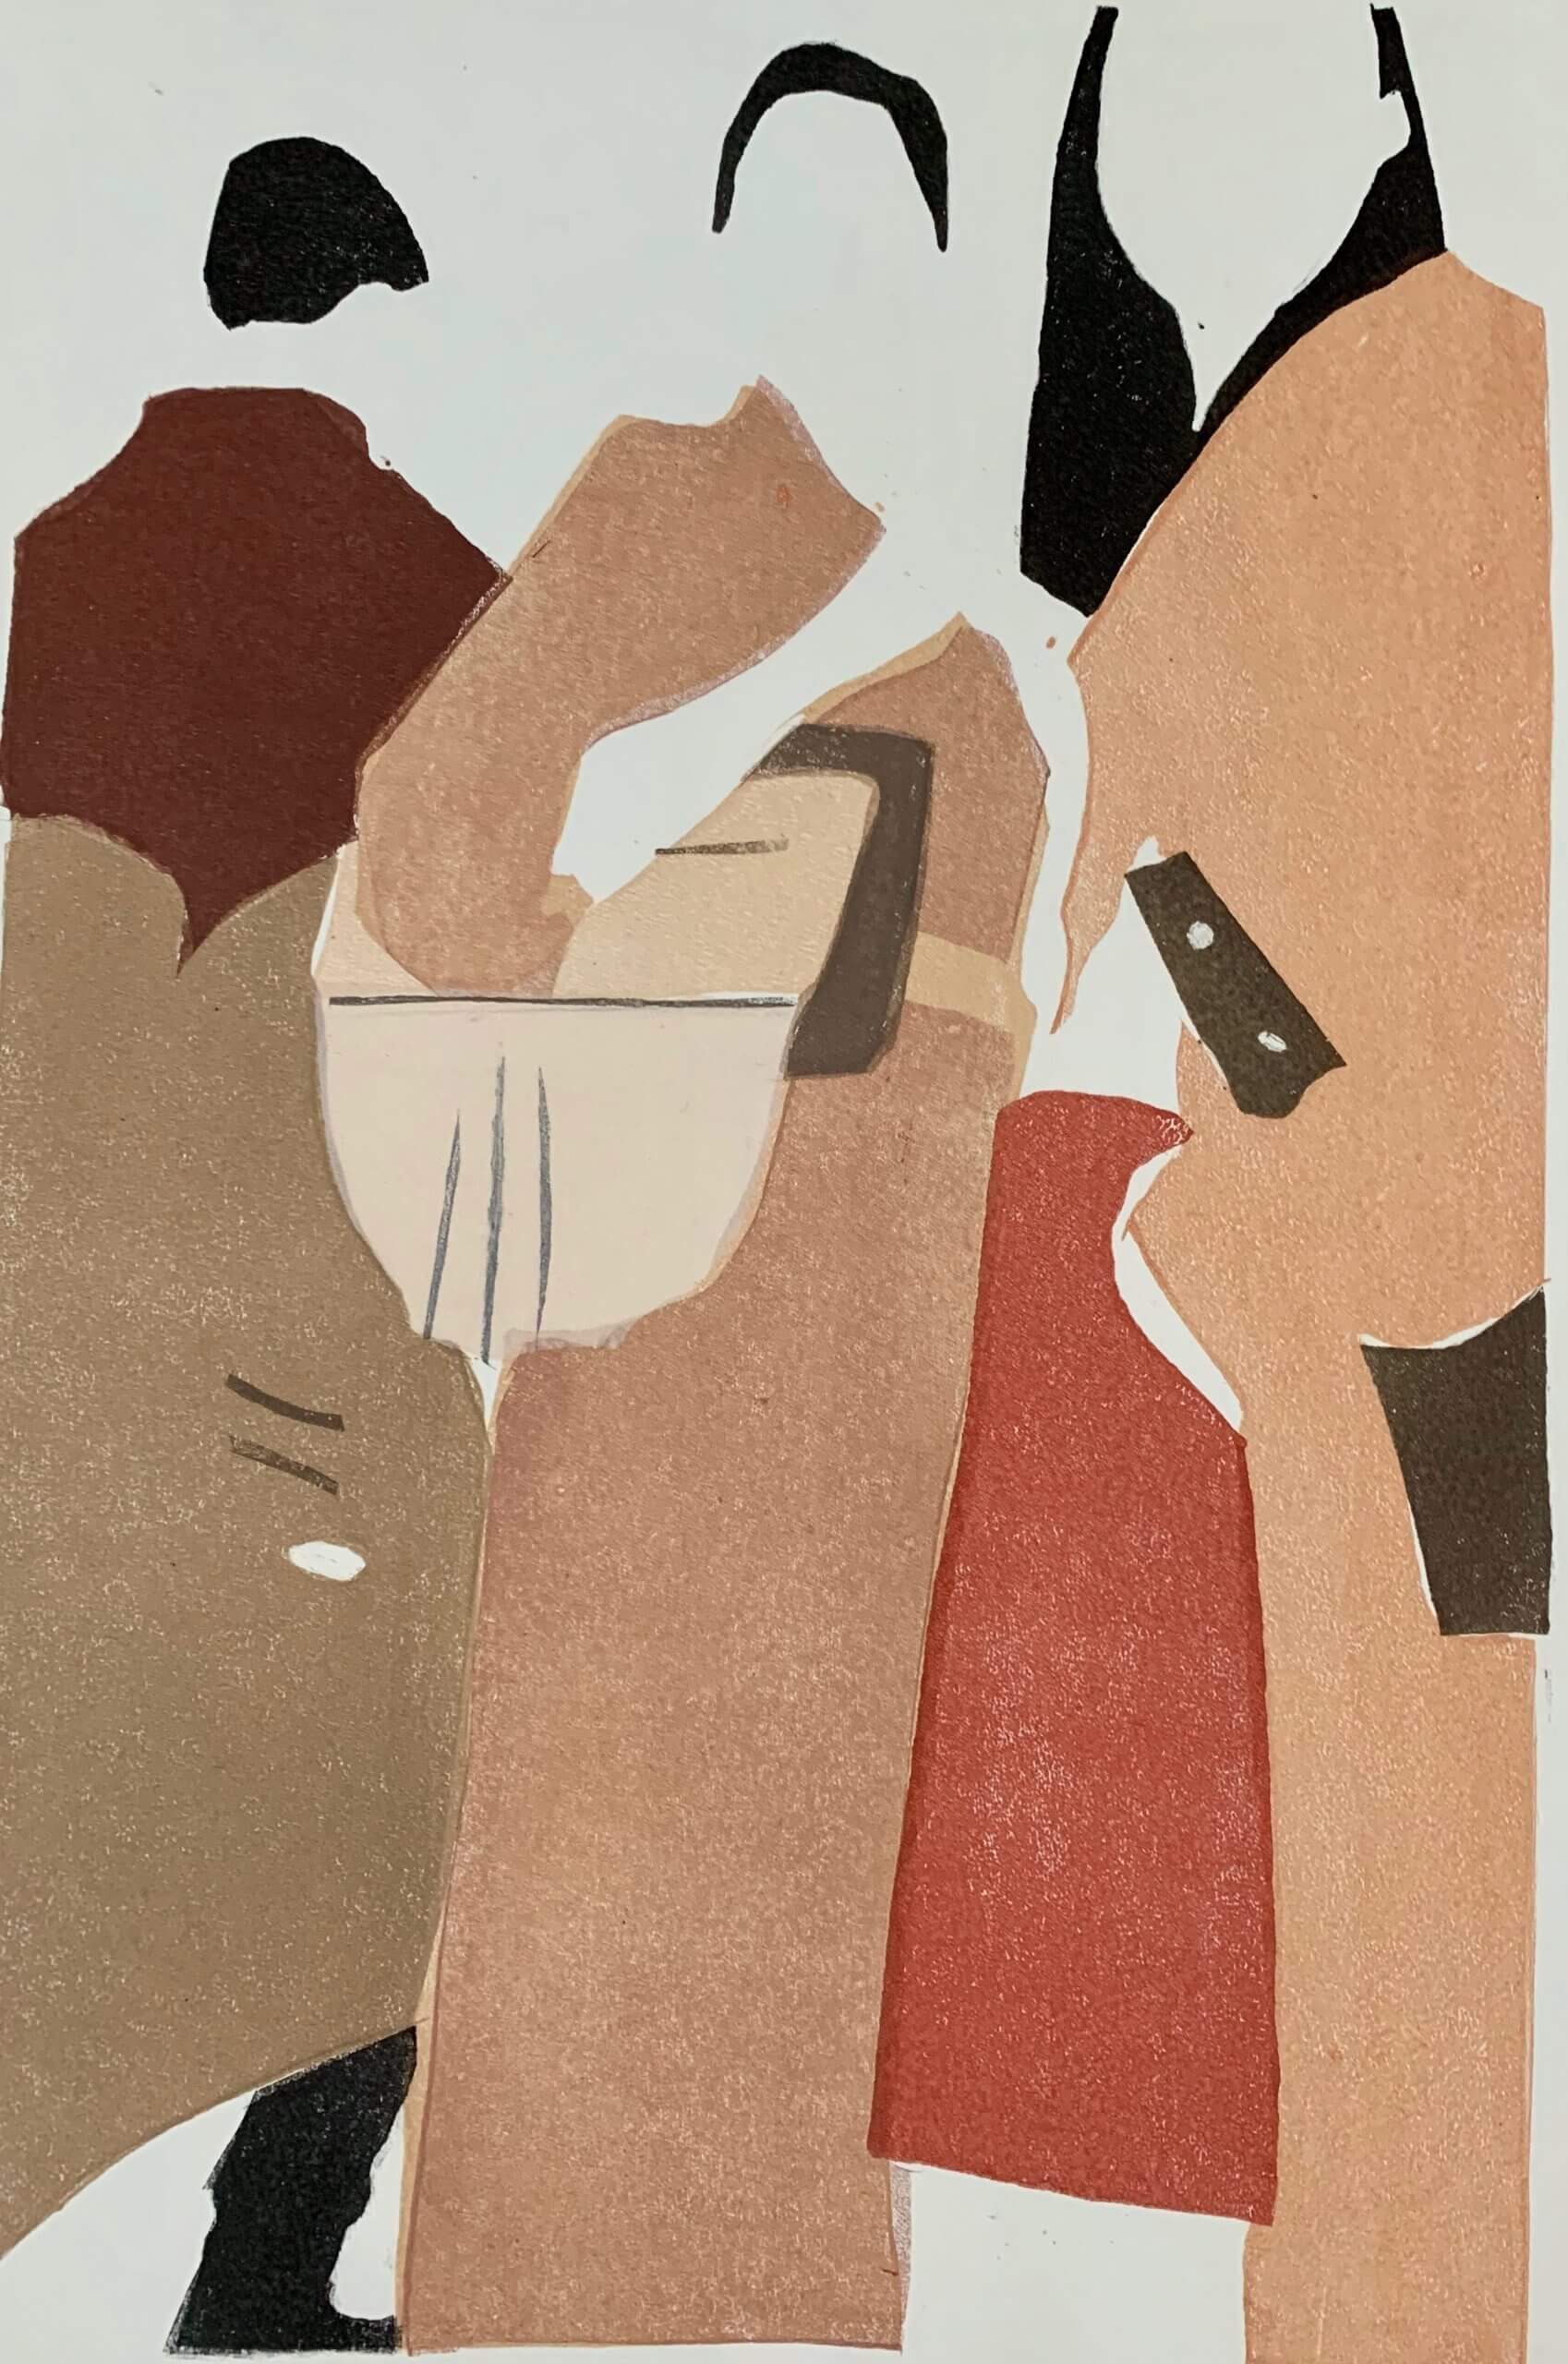 An artwork depicting women wearing their dresses